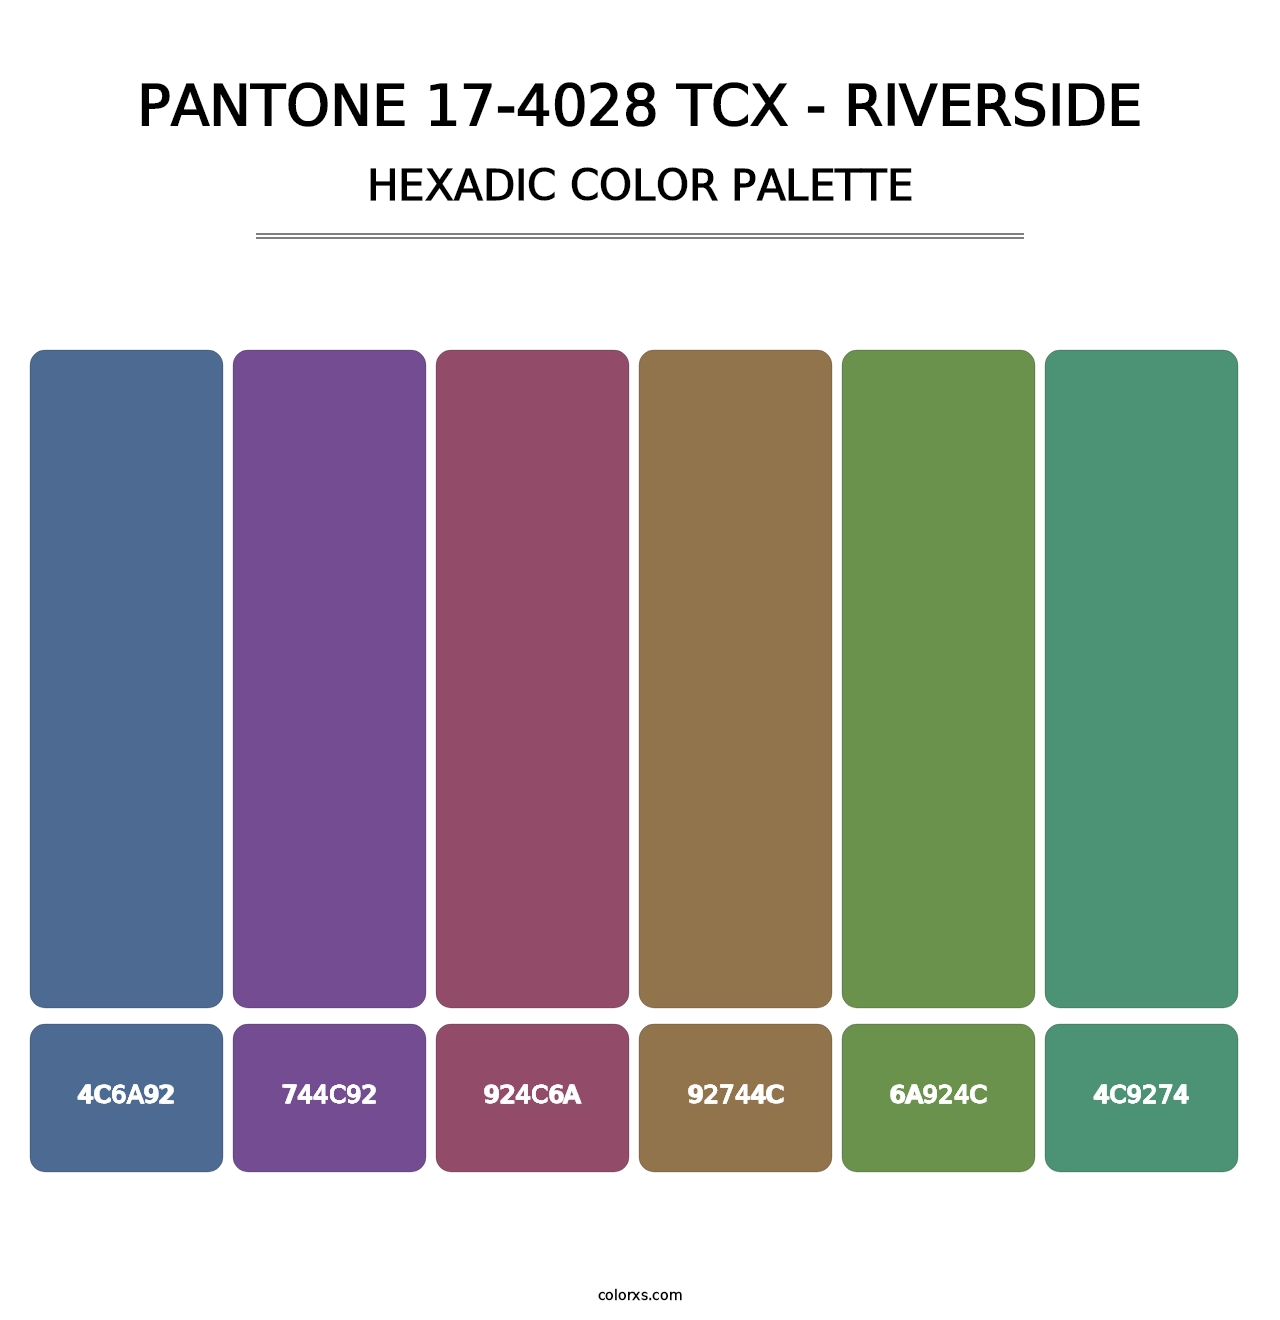 PANTONE 17-4028 TCX - Riverside - Hexadic Color Palette